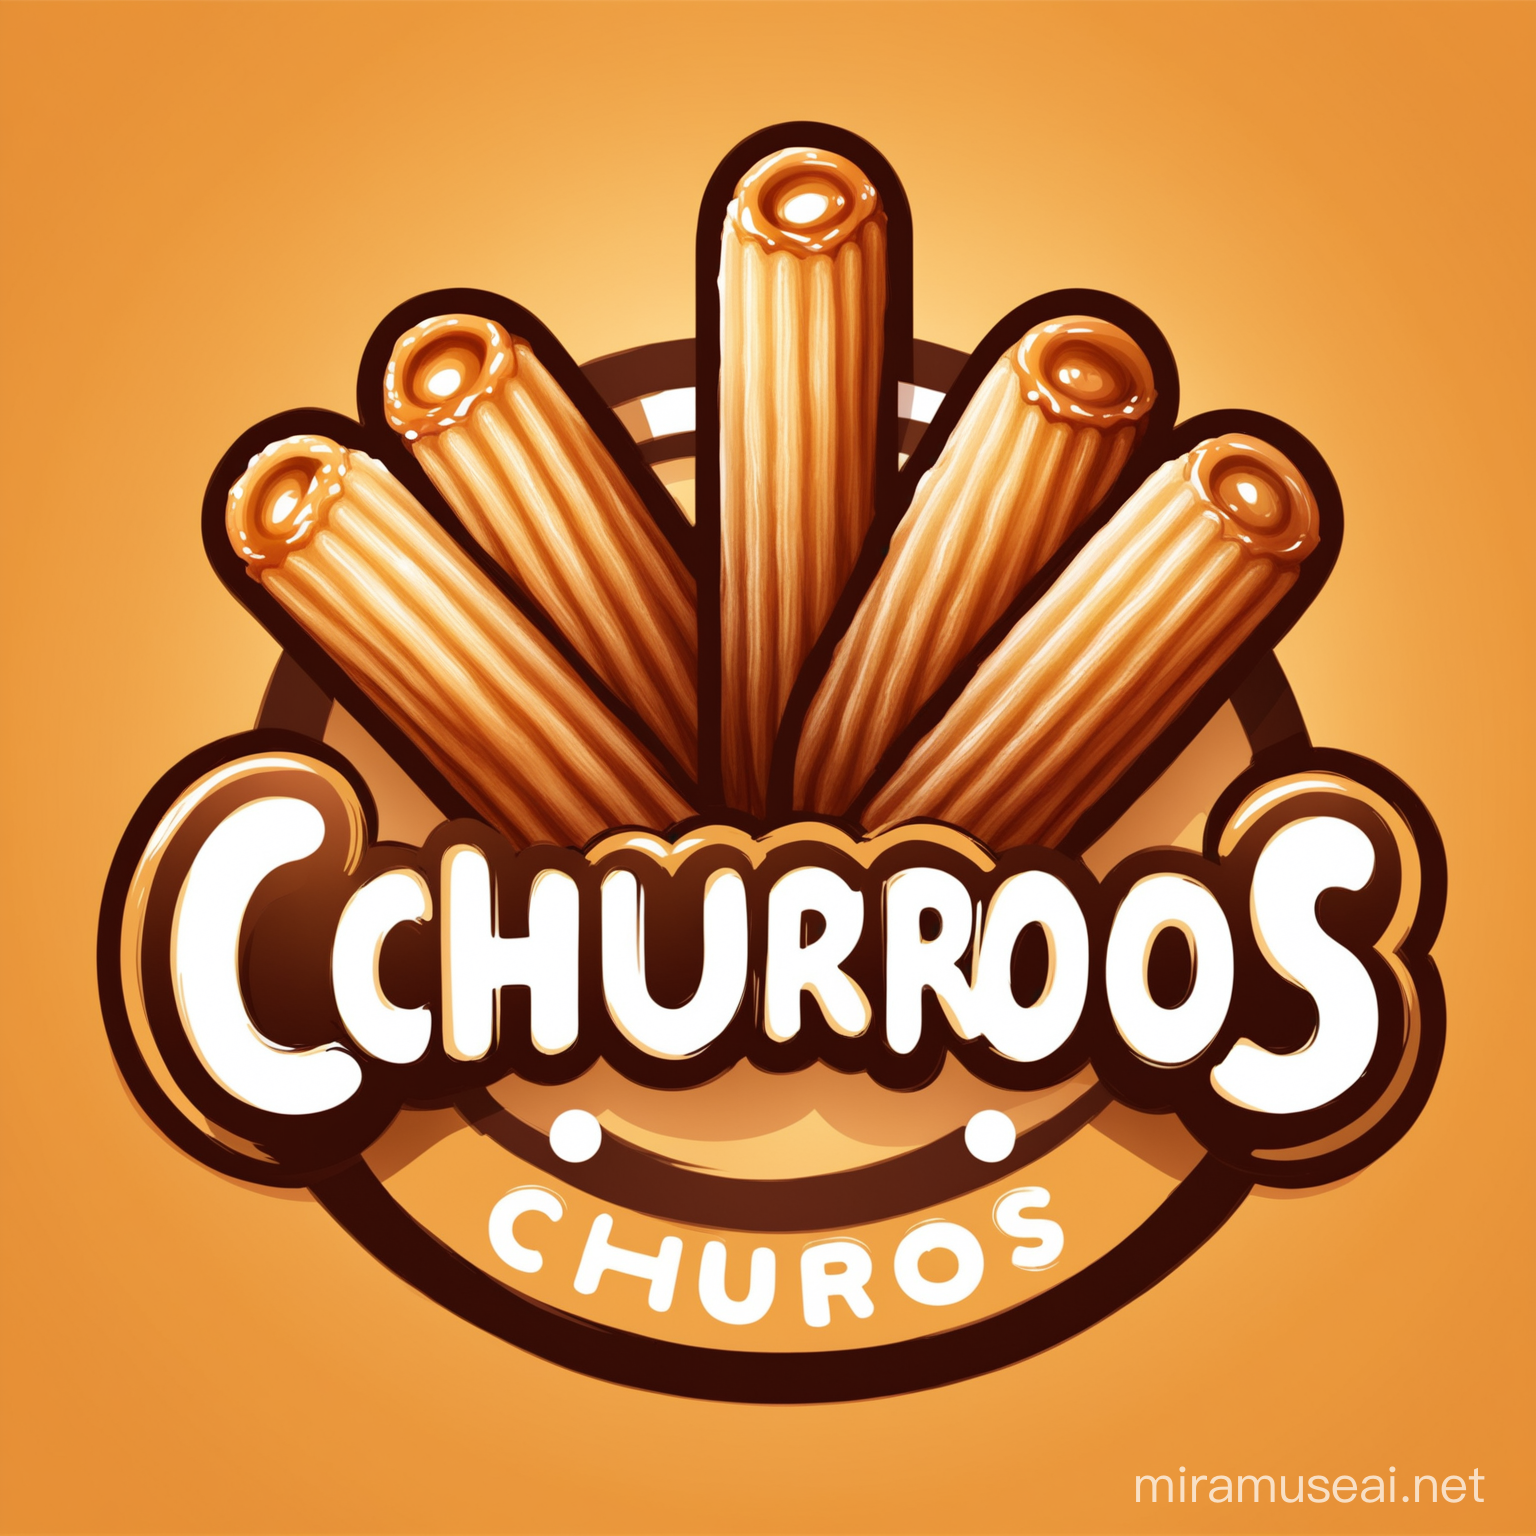 Churros logo for business 